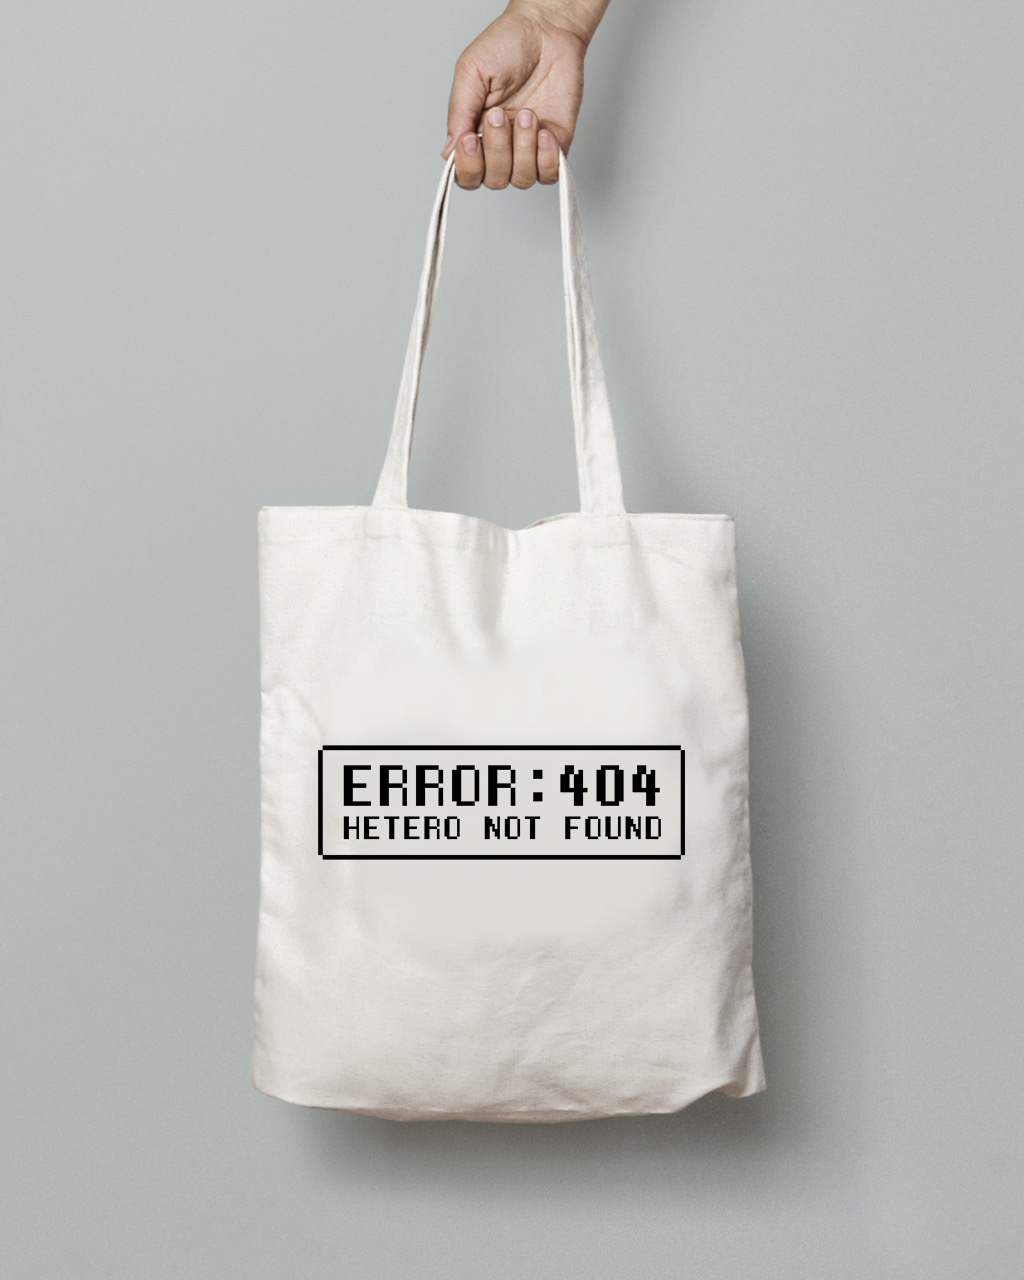 error-404-hetero-not-found-tote-bag